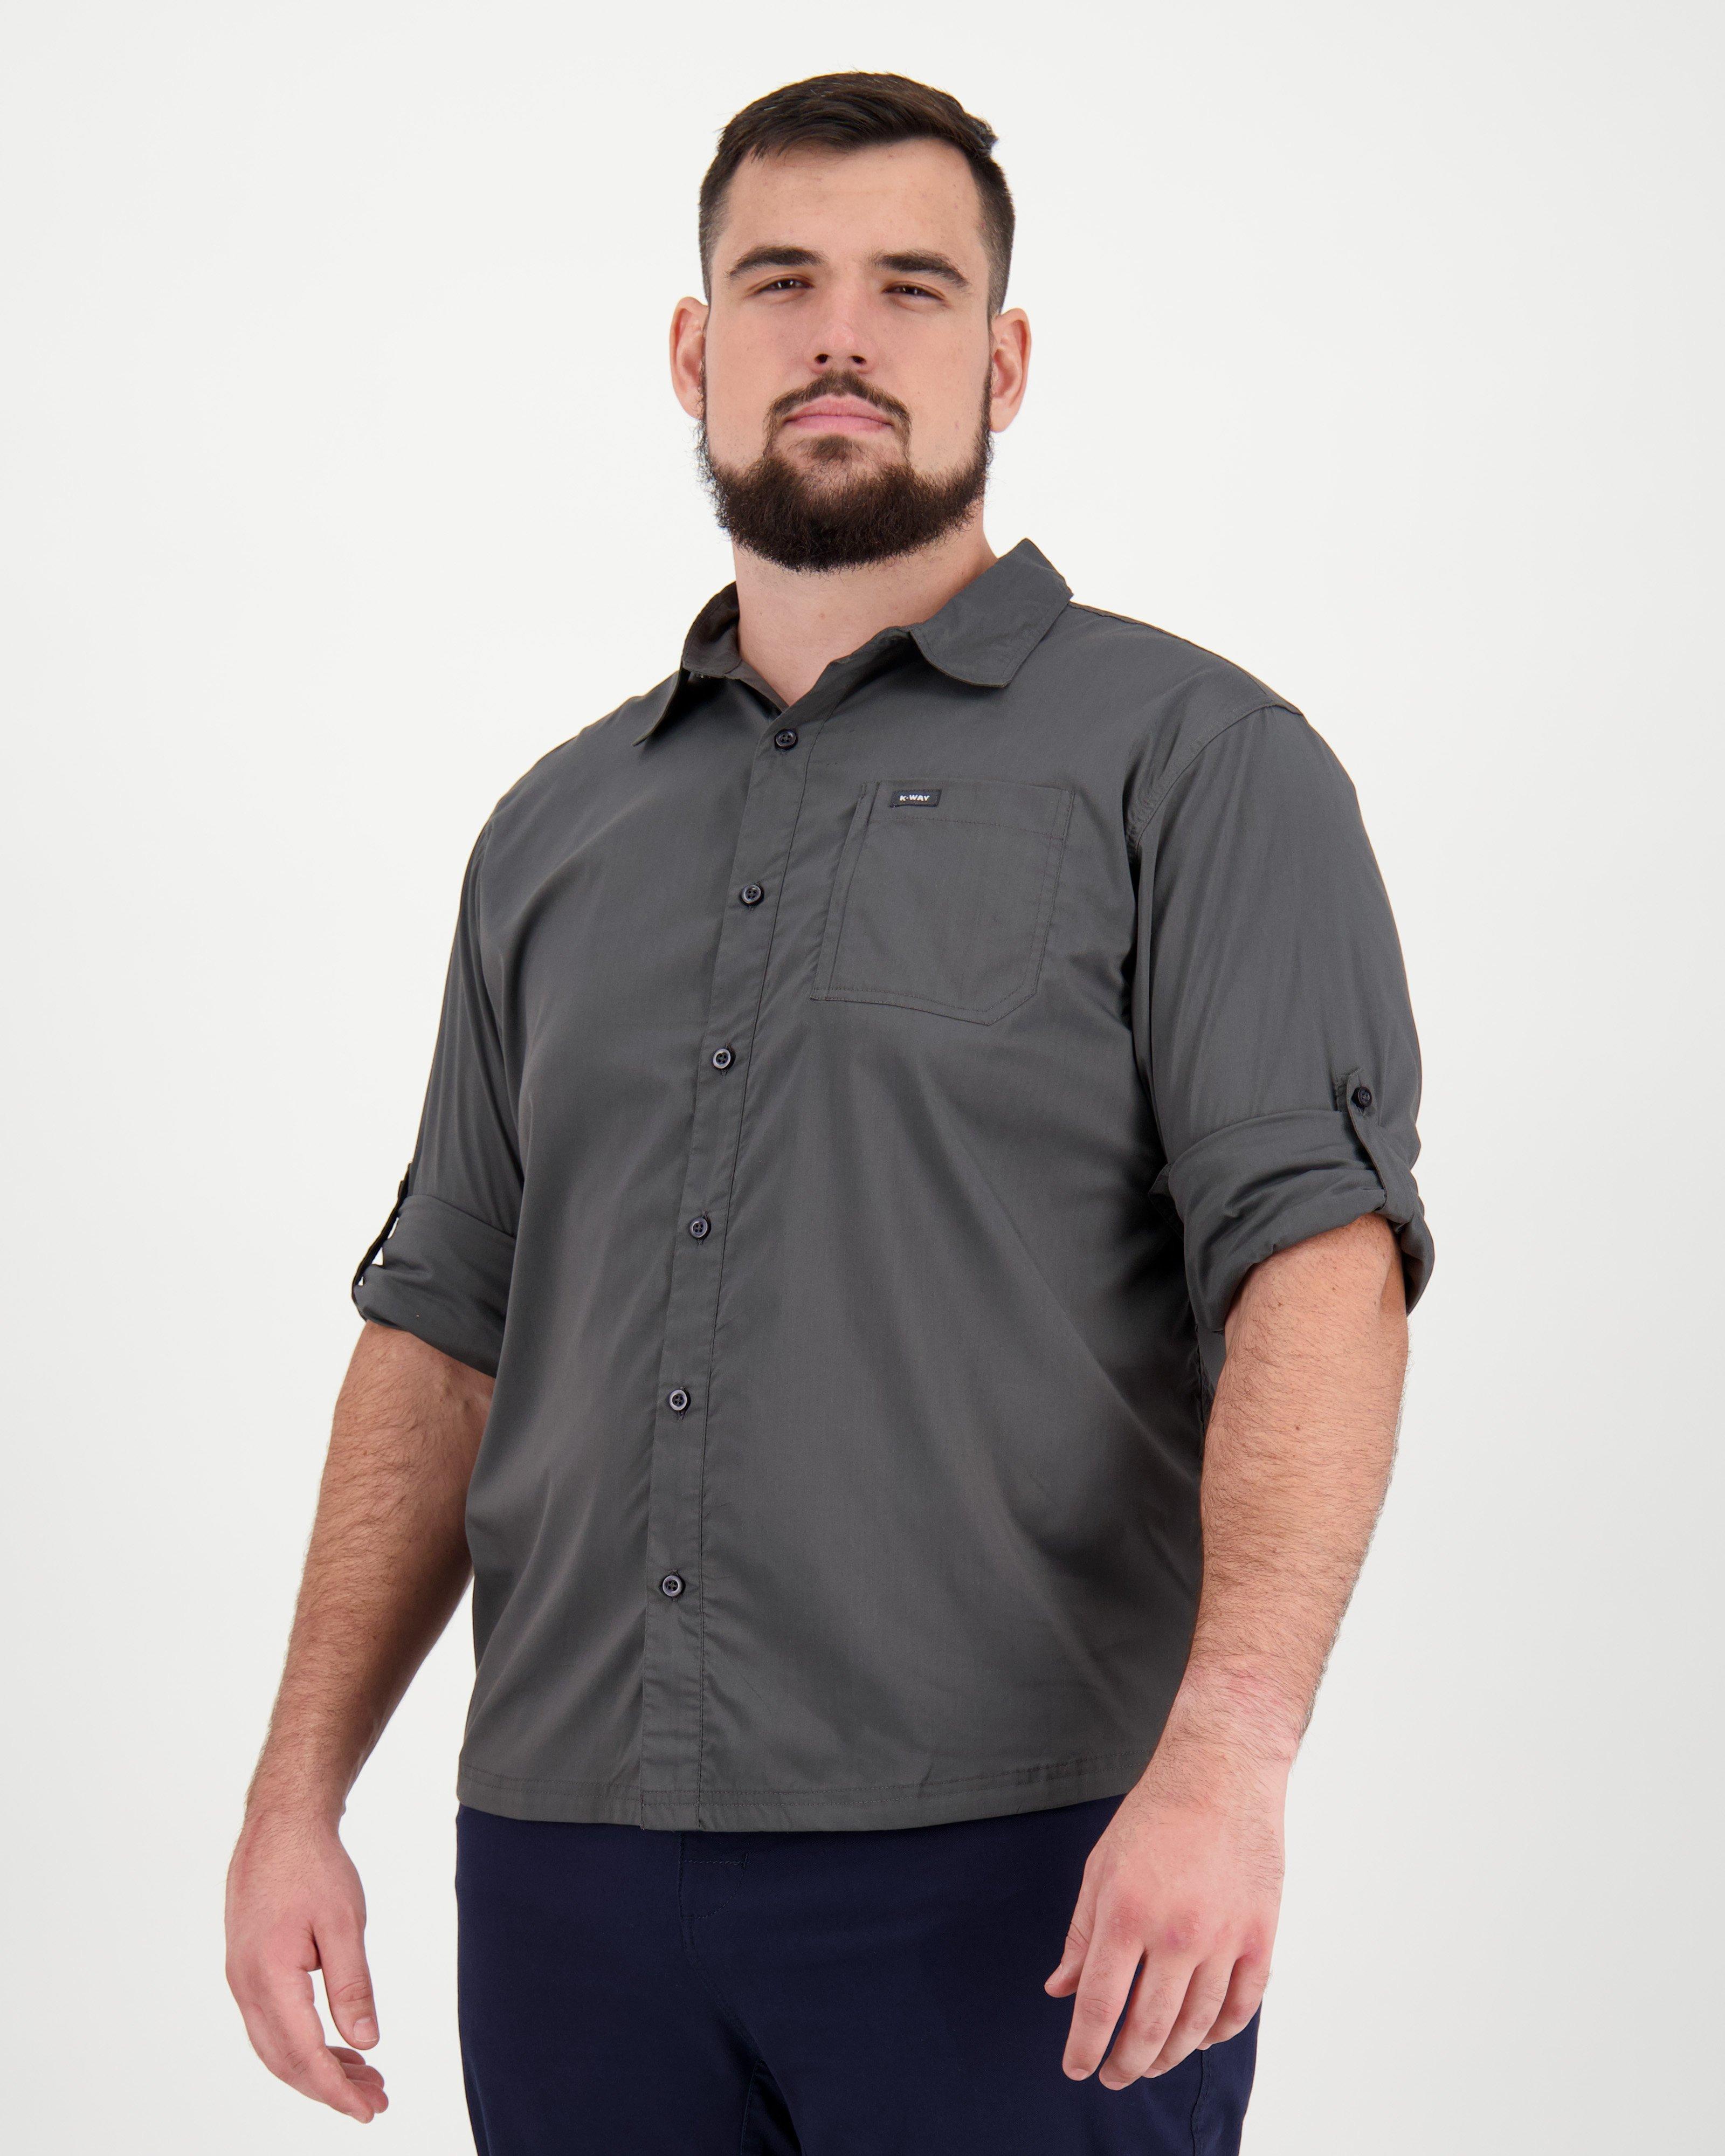 K-Way Elements Men's Extended Sizes Travel Long Sleeve Shirt -  Graphite